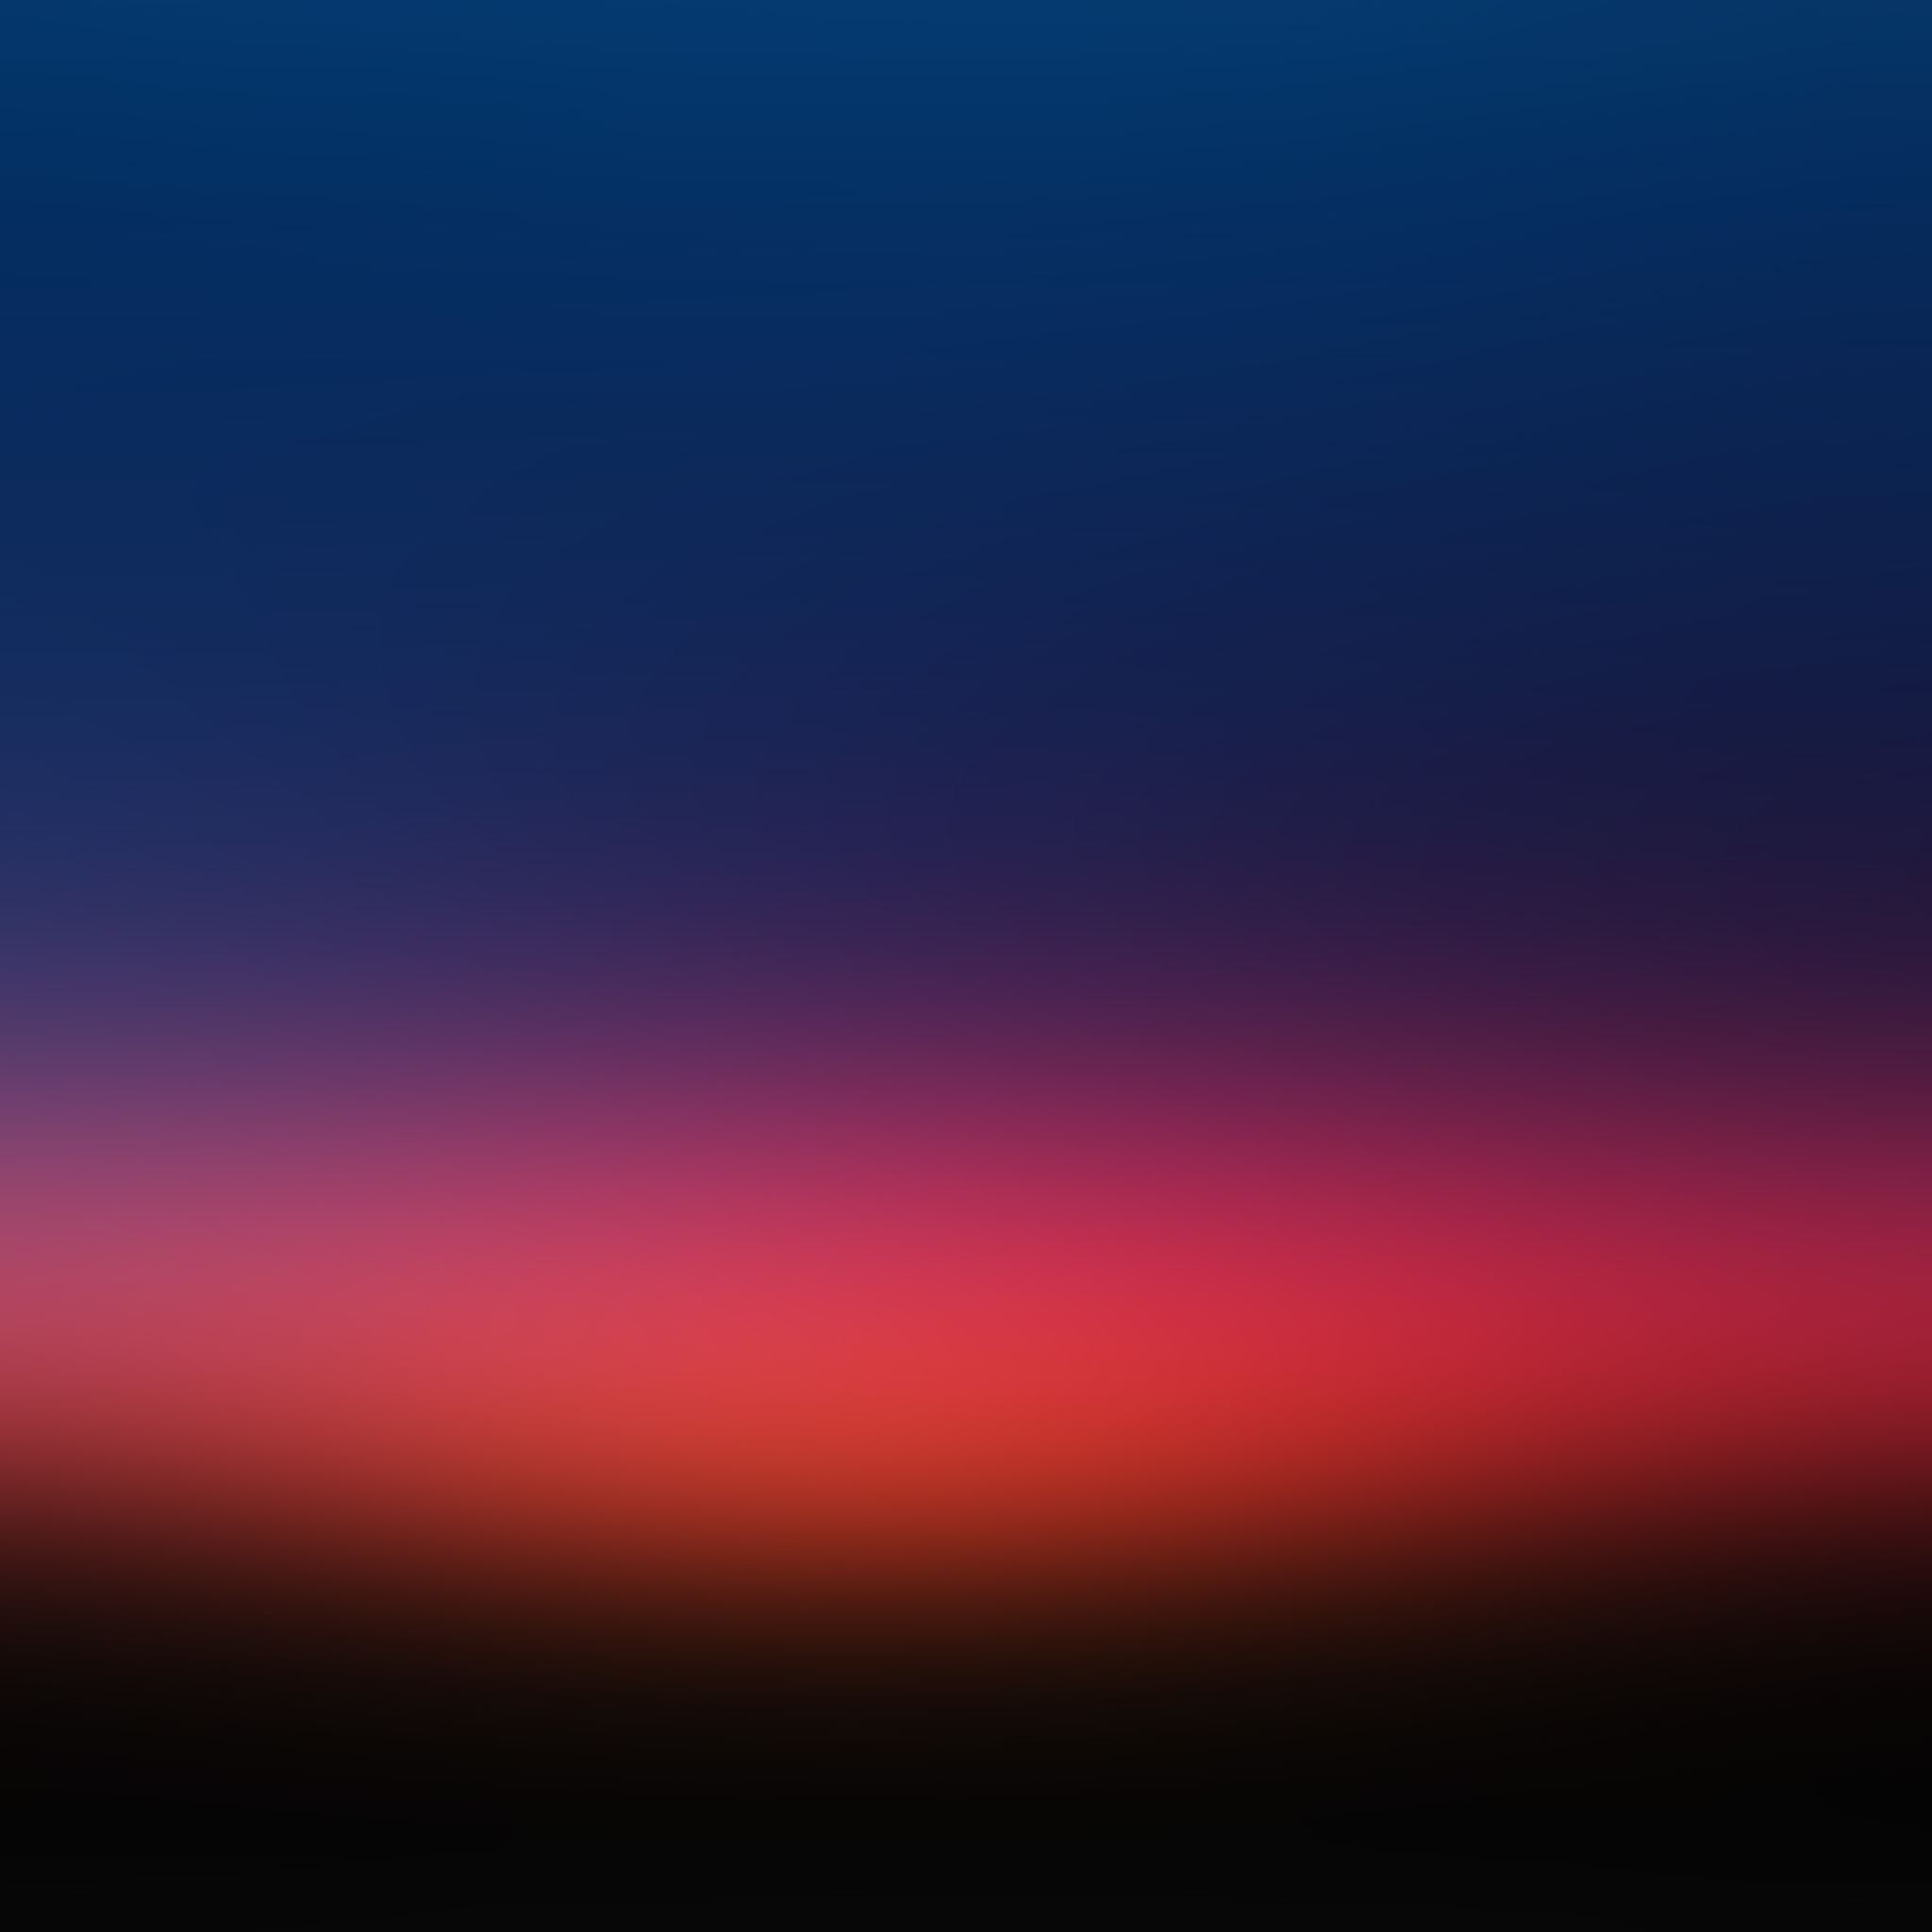 Morning Light Red Blue Blur Gradation iPad Air wallpaper 